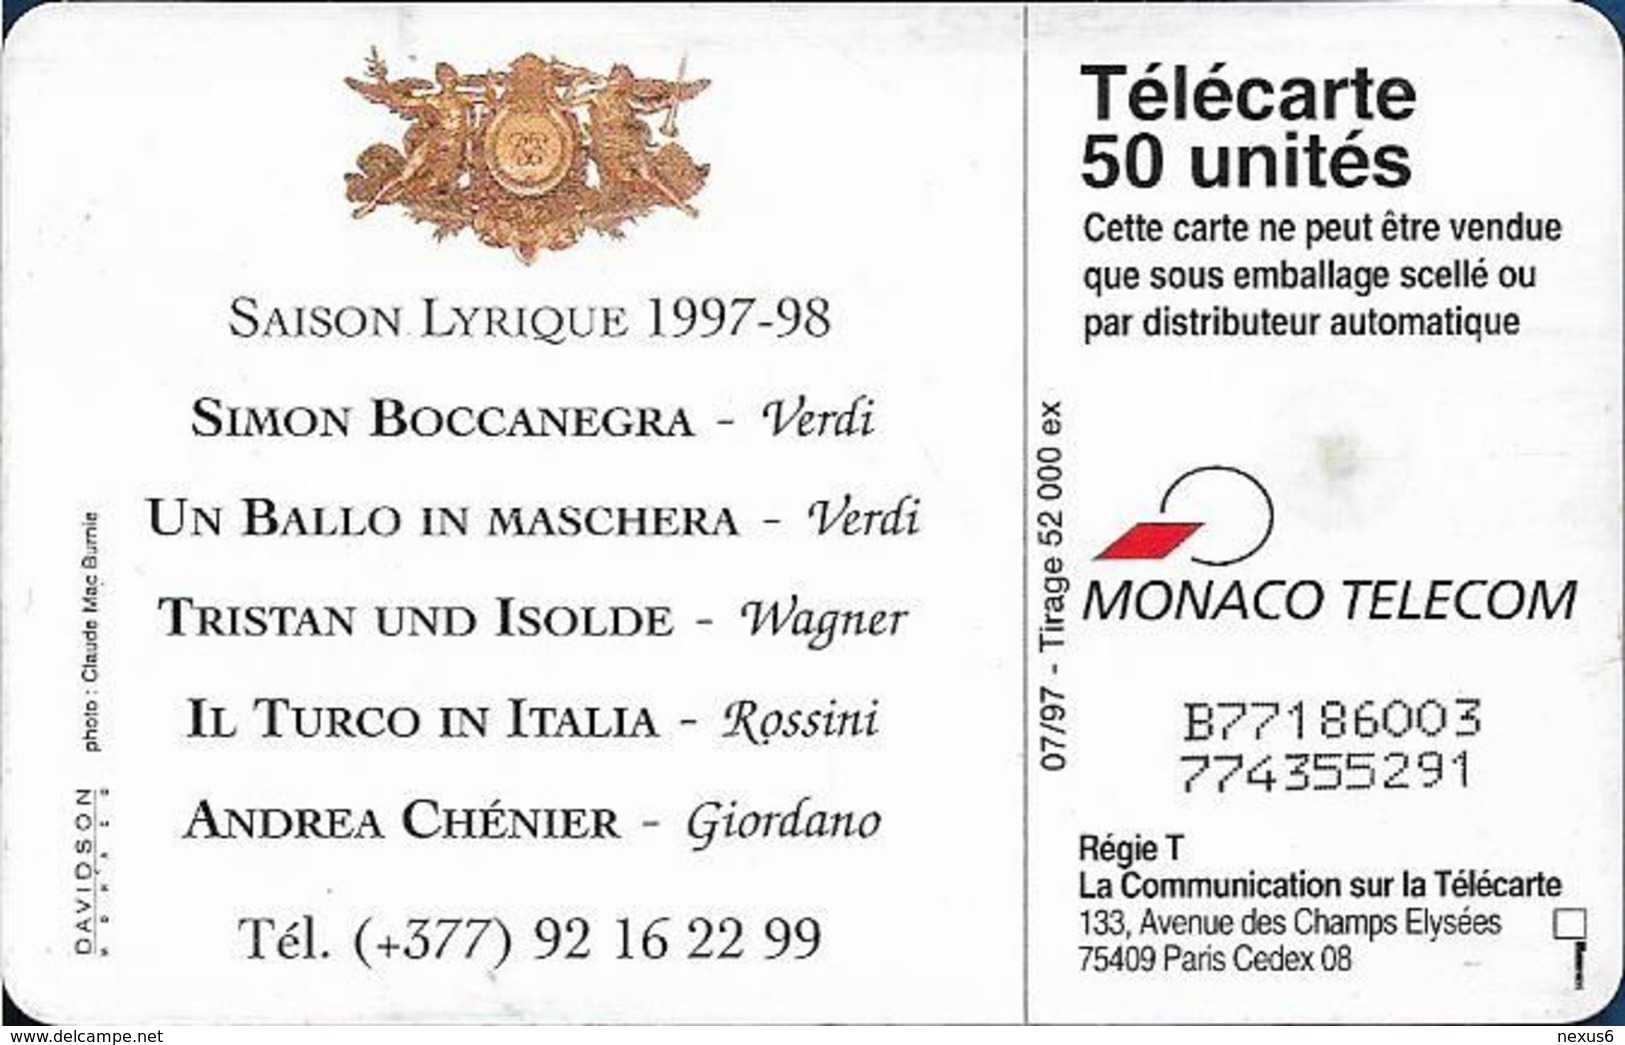 Monaco - MF46 (003) - Opéra De Monte-Carlo - Gem1B Not Symm. Red, Cn. B77xxx003, 07.1997, 50Units, 52.000ex, Used - Monaco